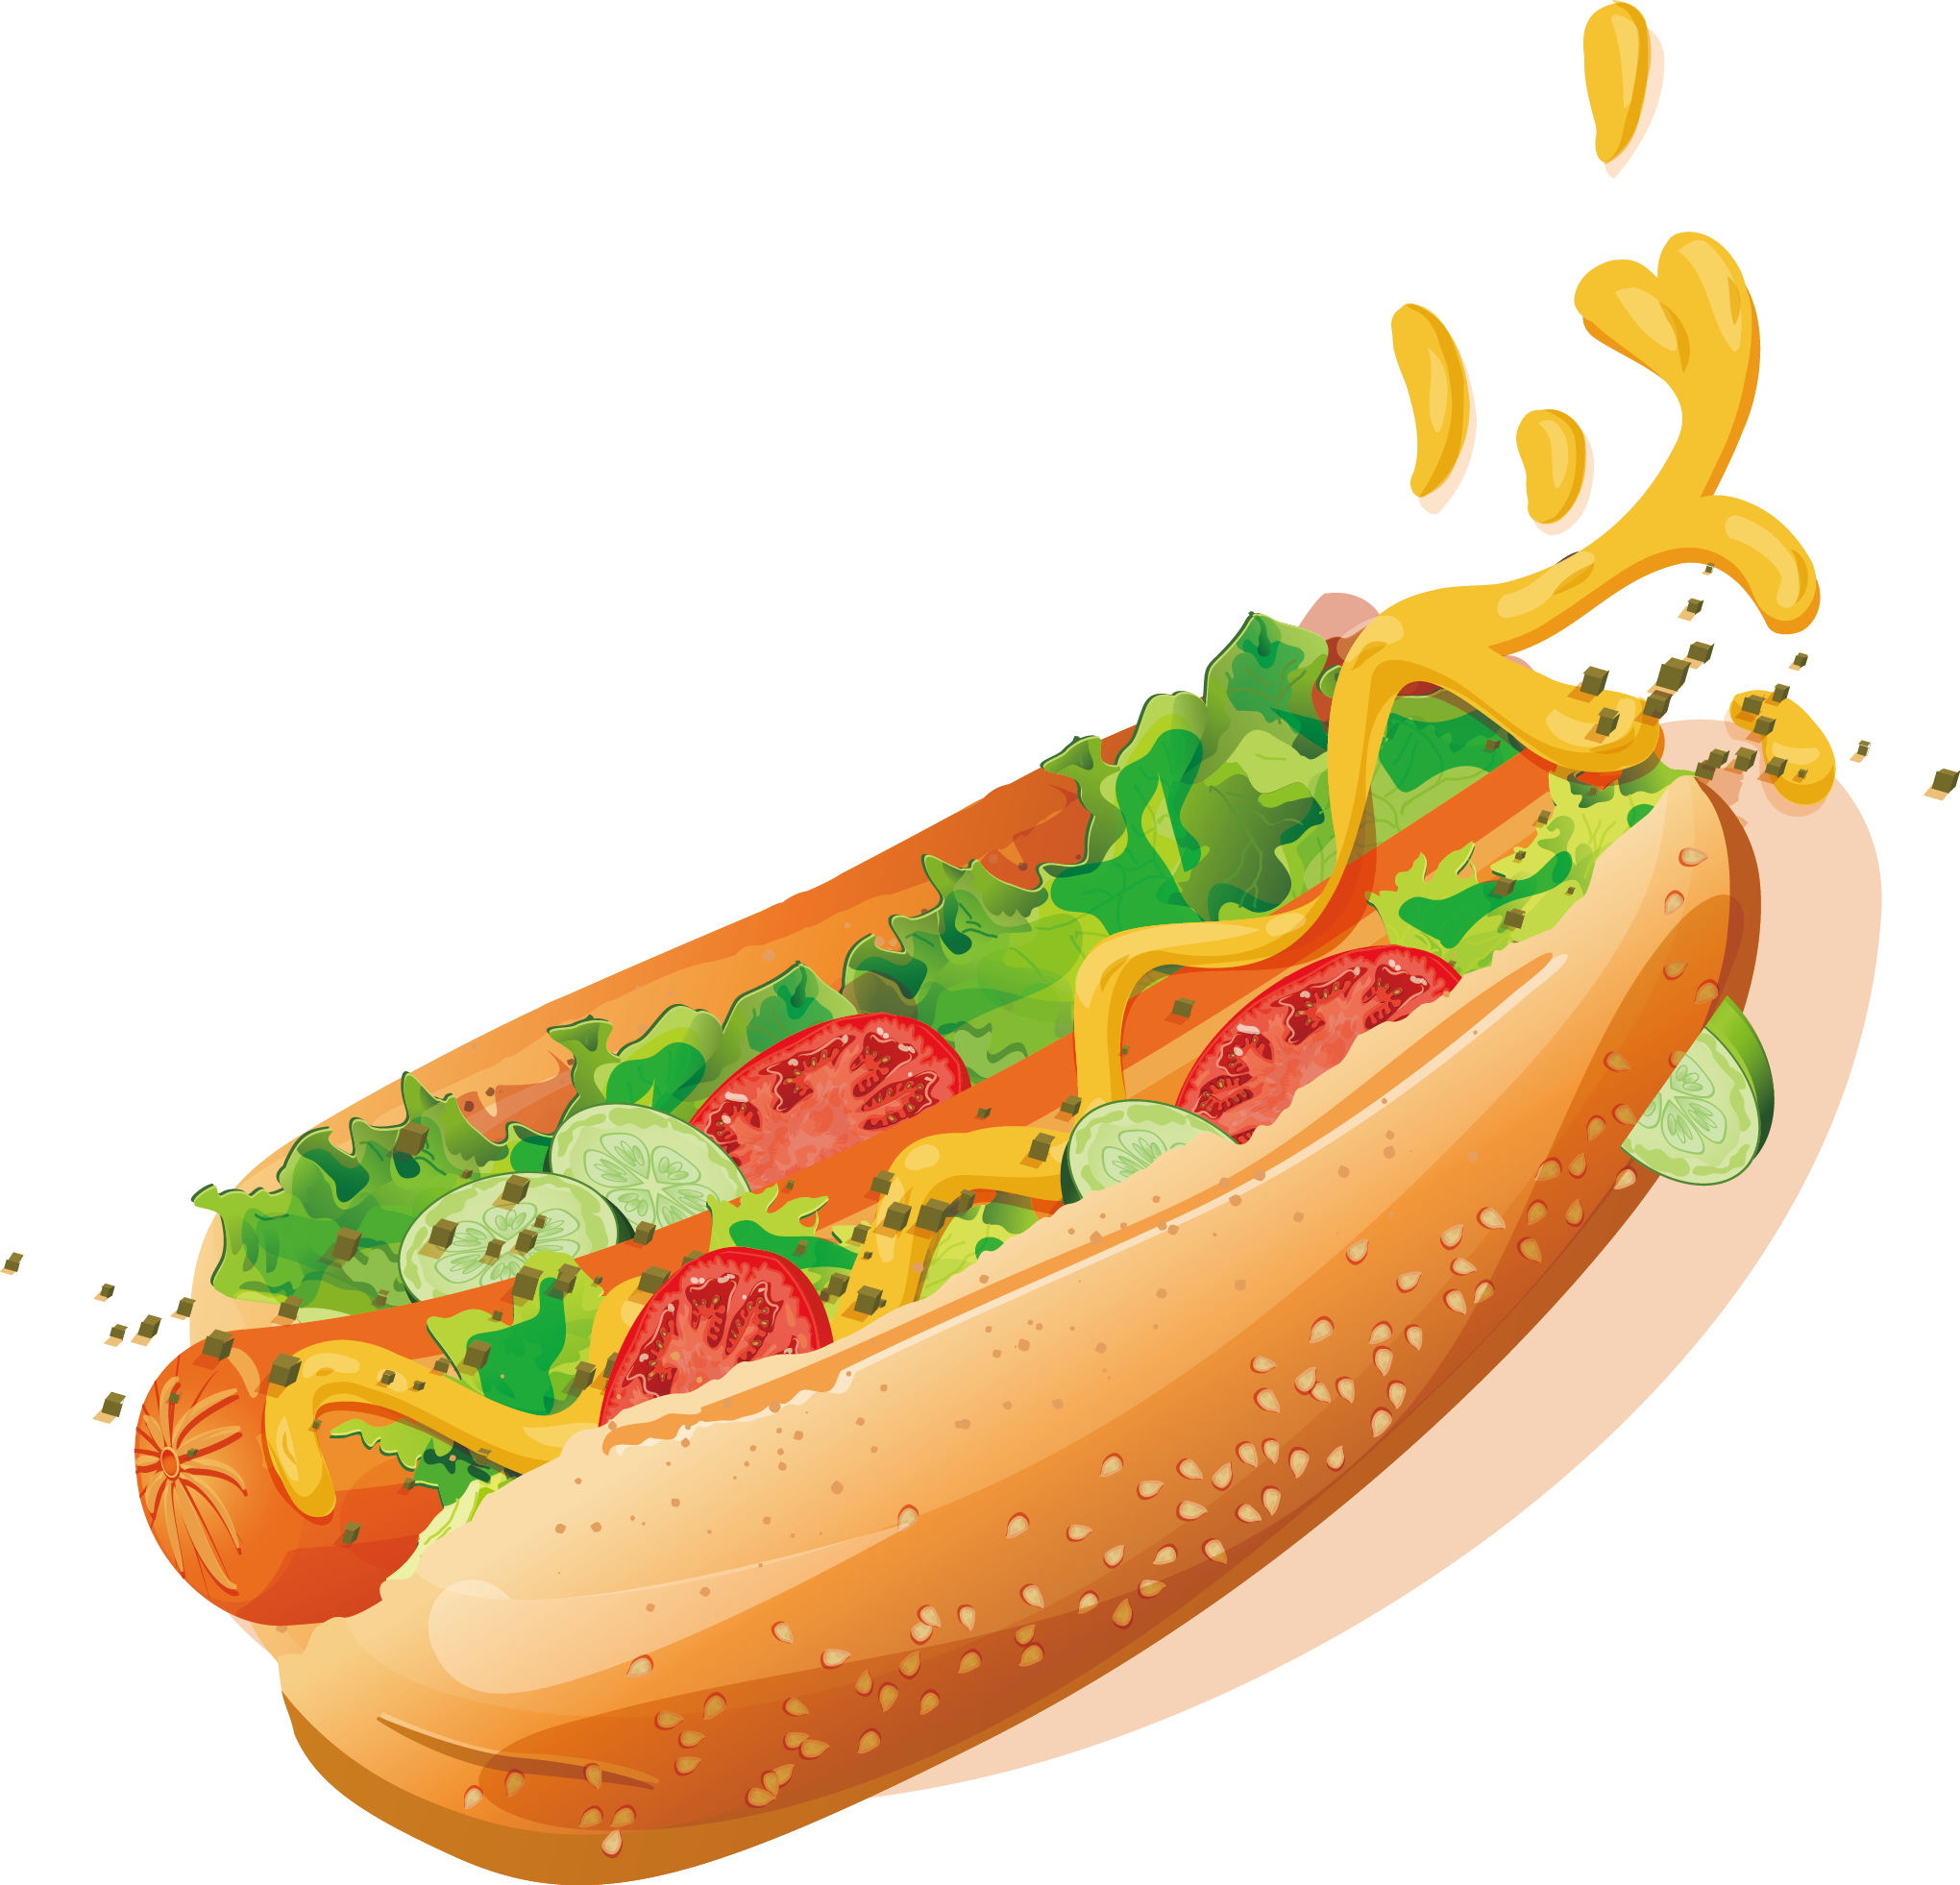 hotdog clipart corndog